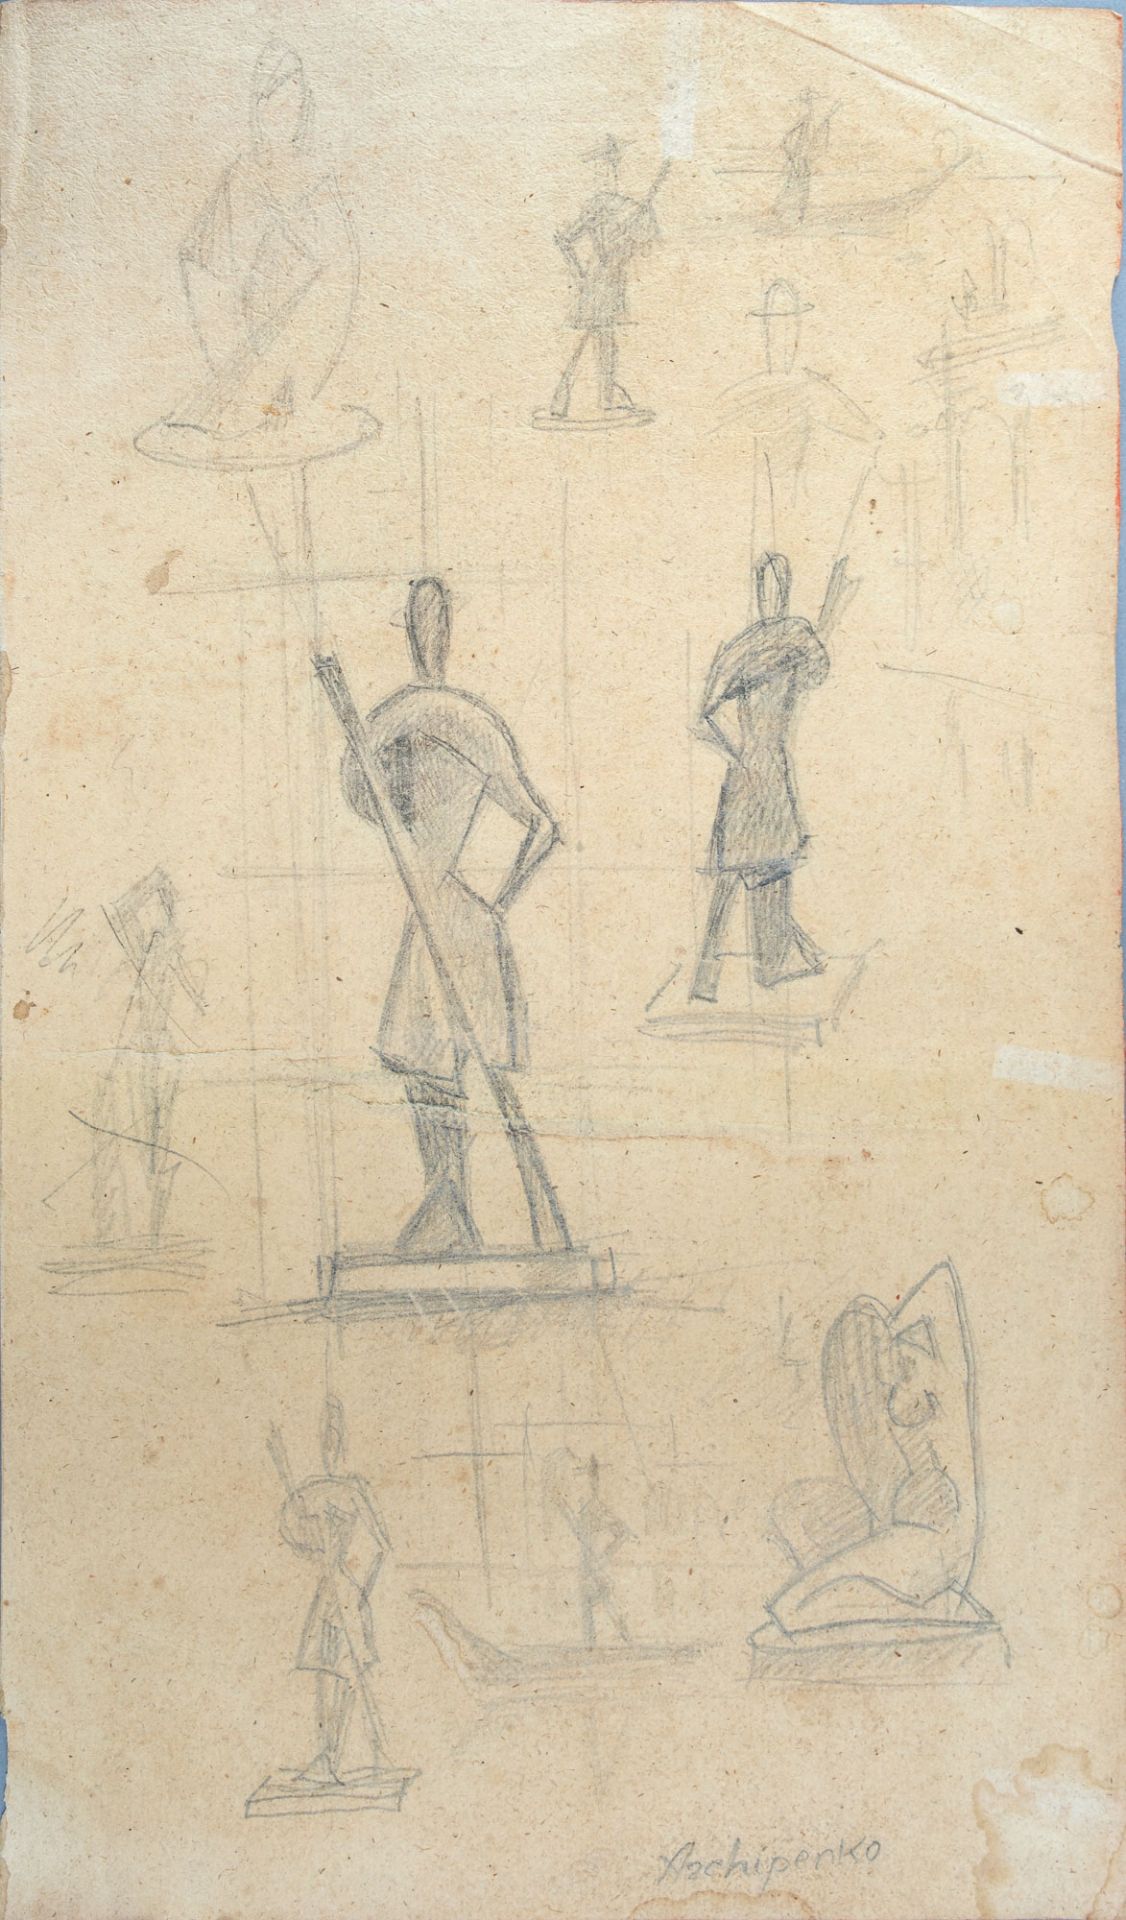 Alexander Archipenko (1887-1964), Sketches for Sculptures